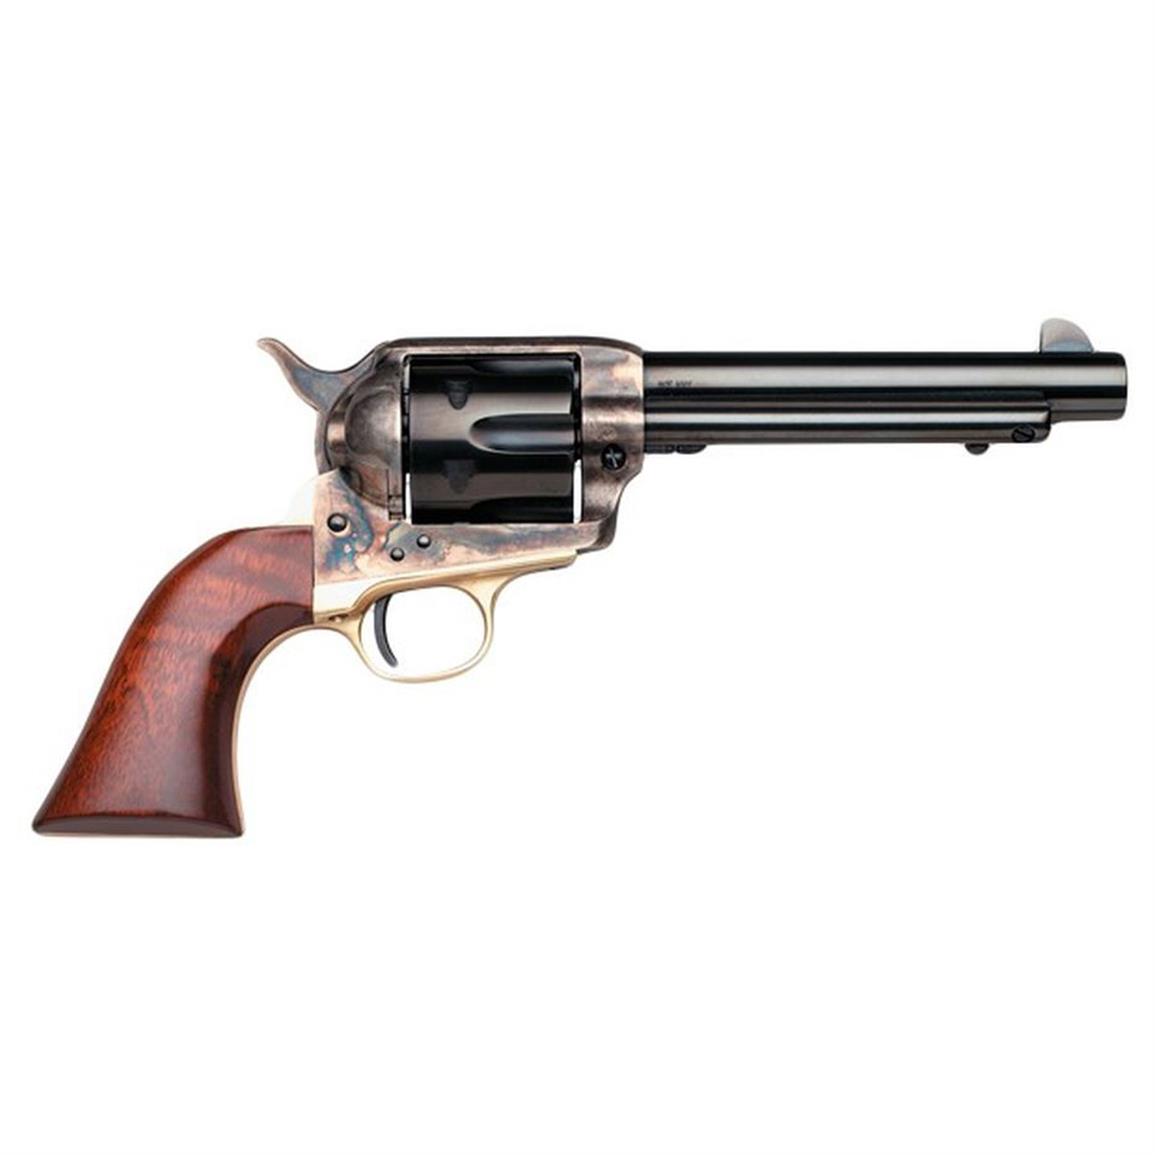 Taylor's & Co. Uberti The Ranch Hand Deluxe, Revolver, .357 Magnum, 441DE, 839665004852, 5.5 inch Barrel